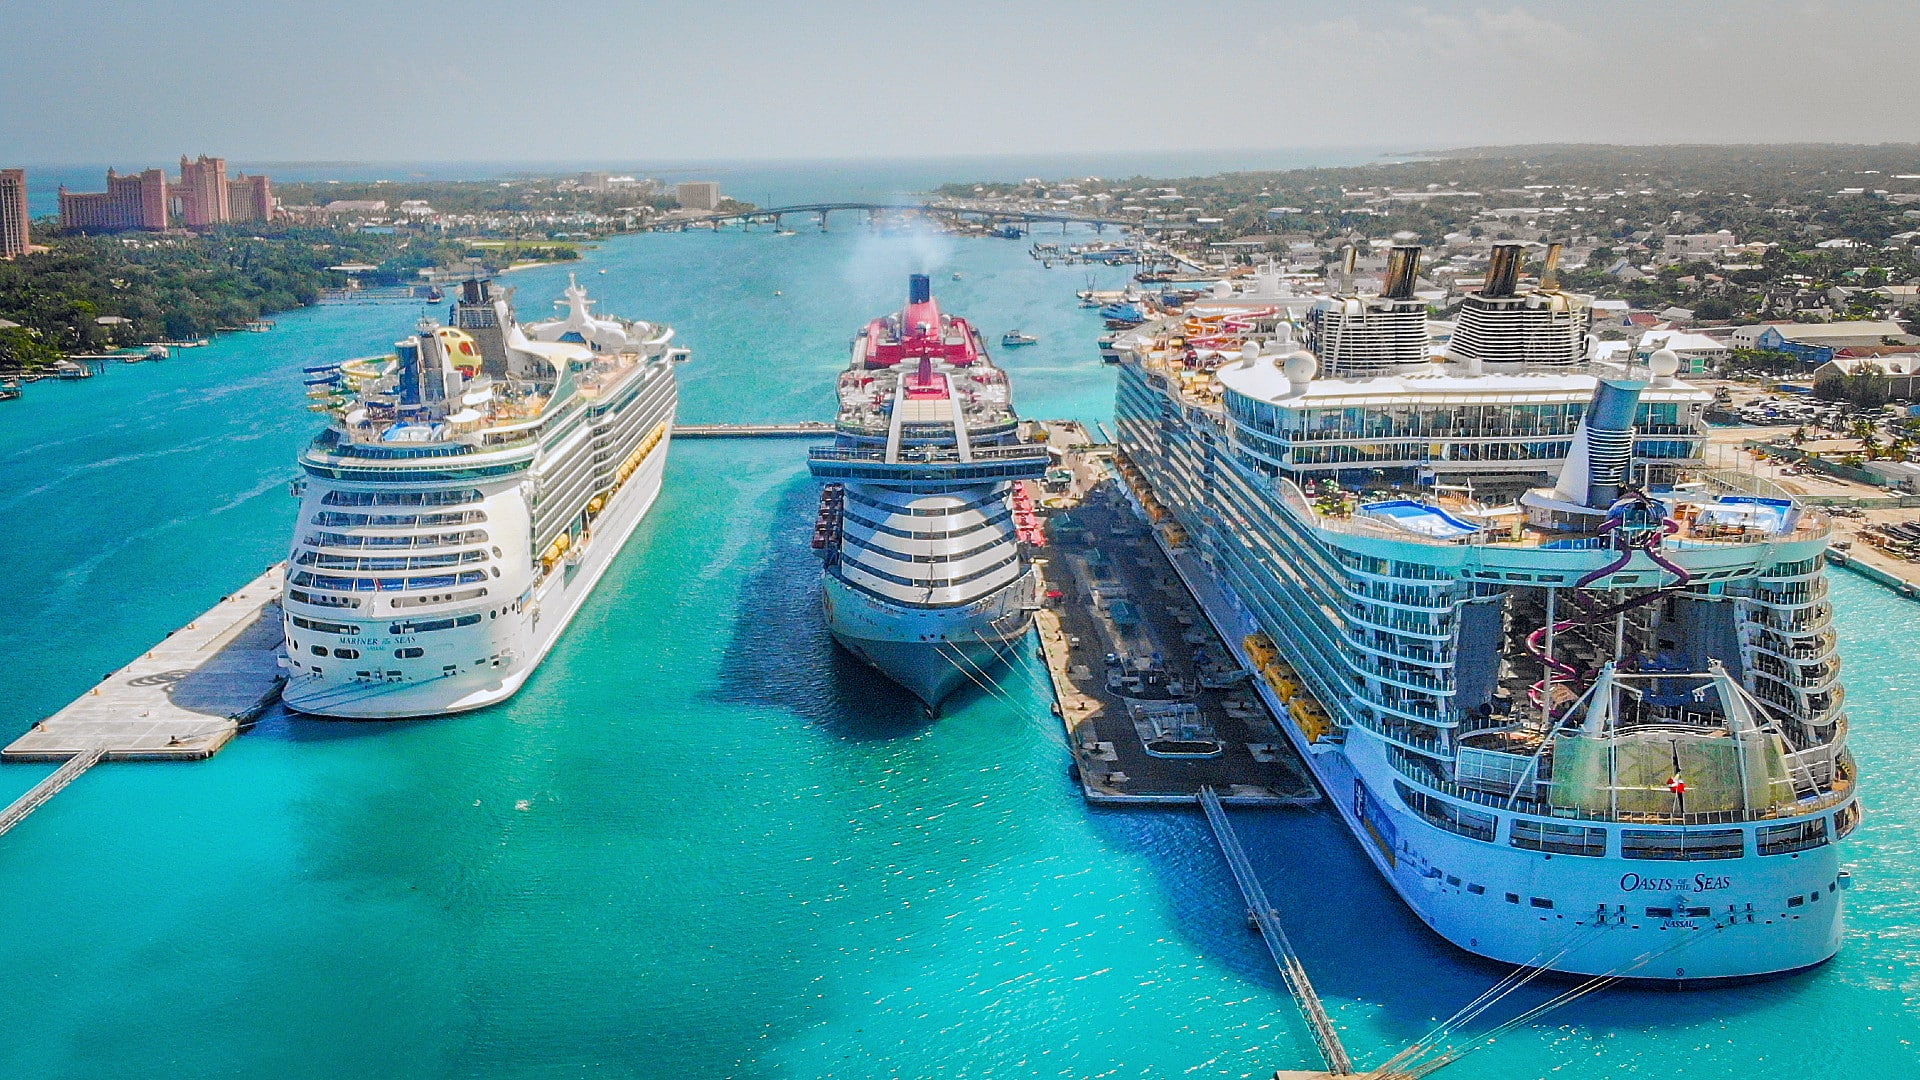 Oasis of the Seas, Virgin Cruises, and Mariner of the Seas dock in Nassau, Bahamas